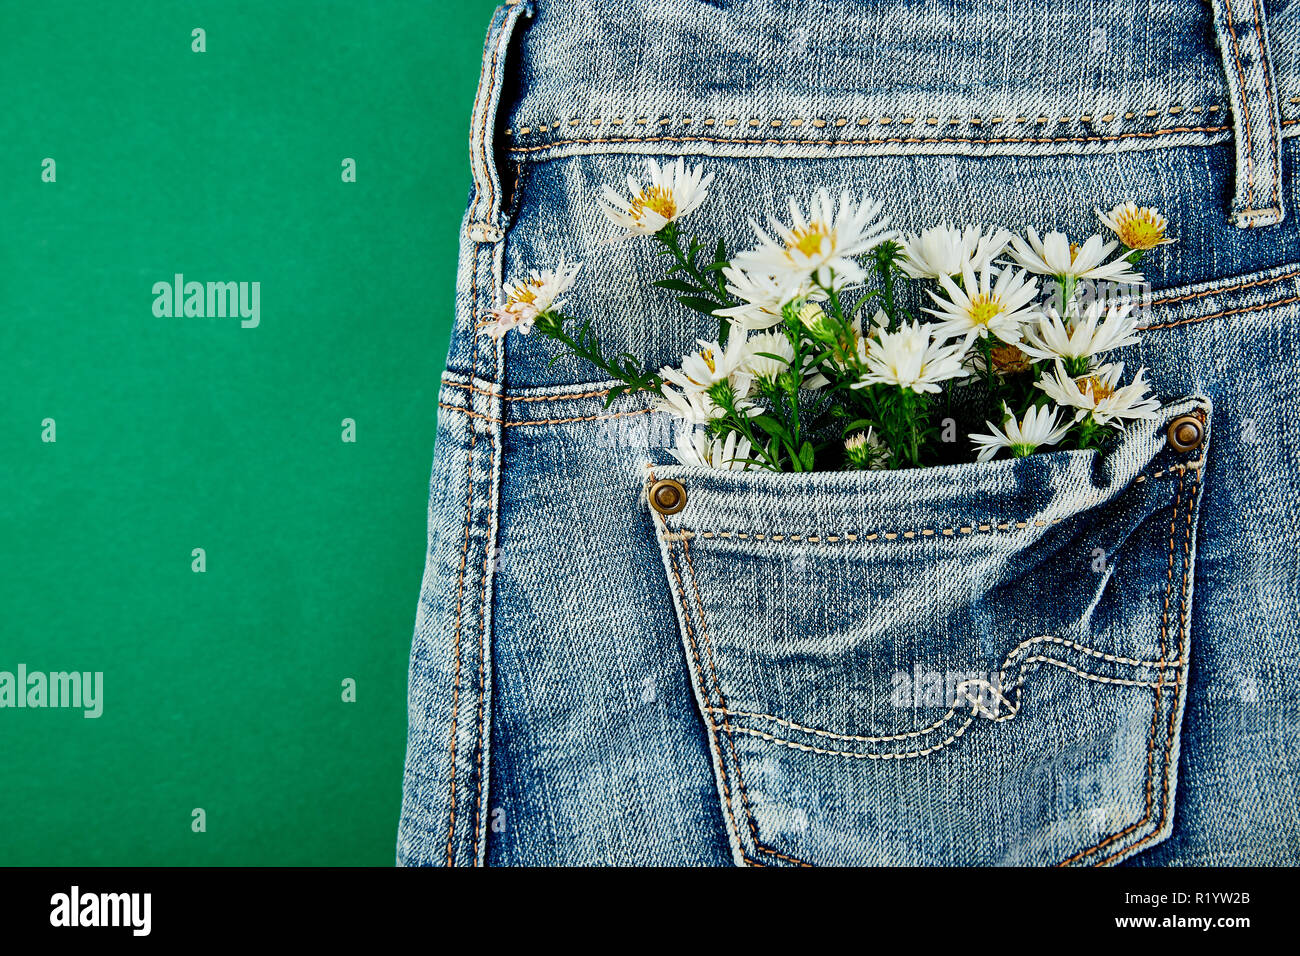 Цветы на джинсах